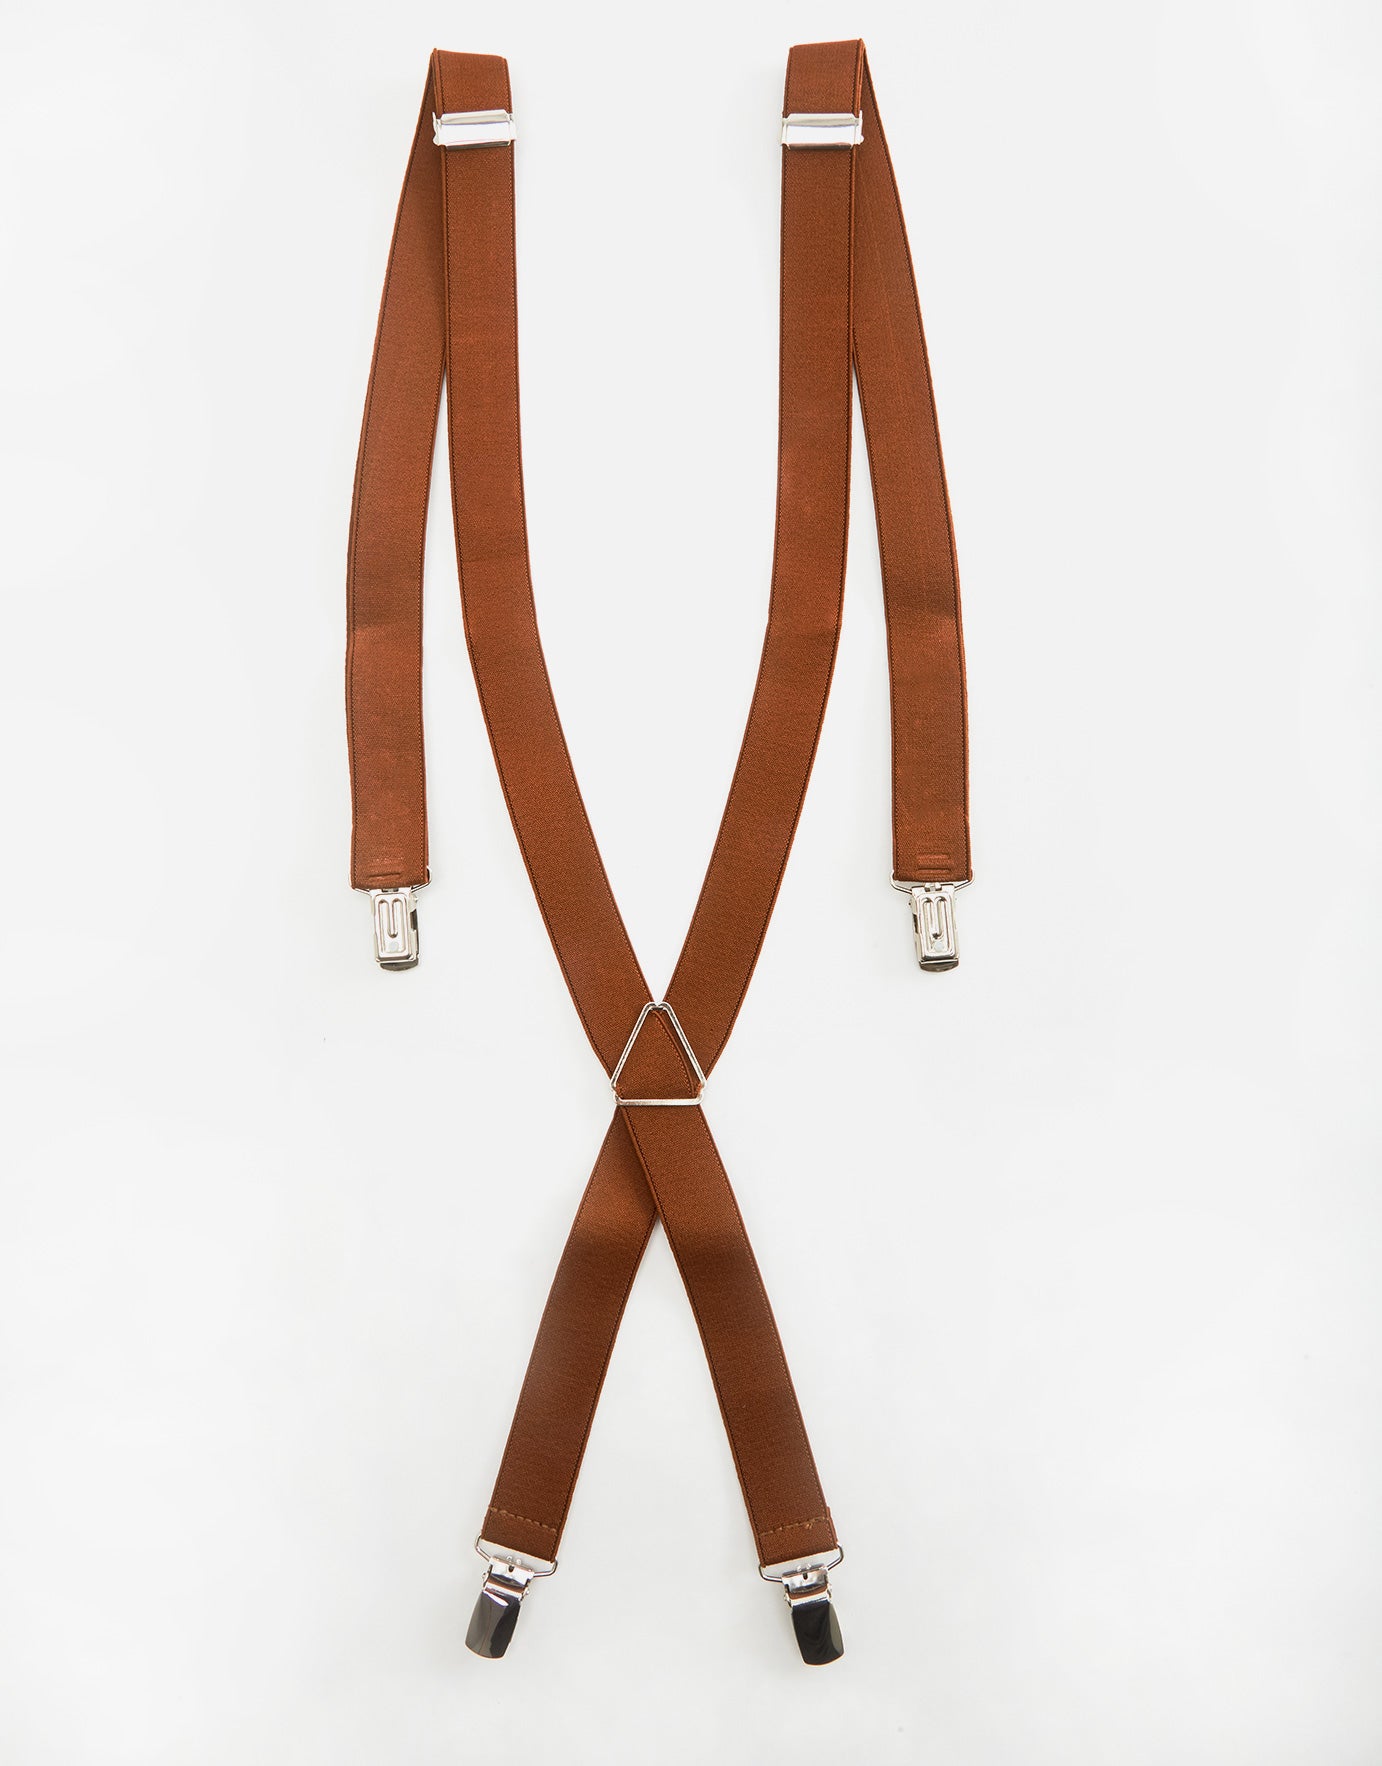 Strap Men's Suspenders Clips Elastic Belt Hanging Pants Clip Adjustable  Braces